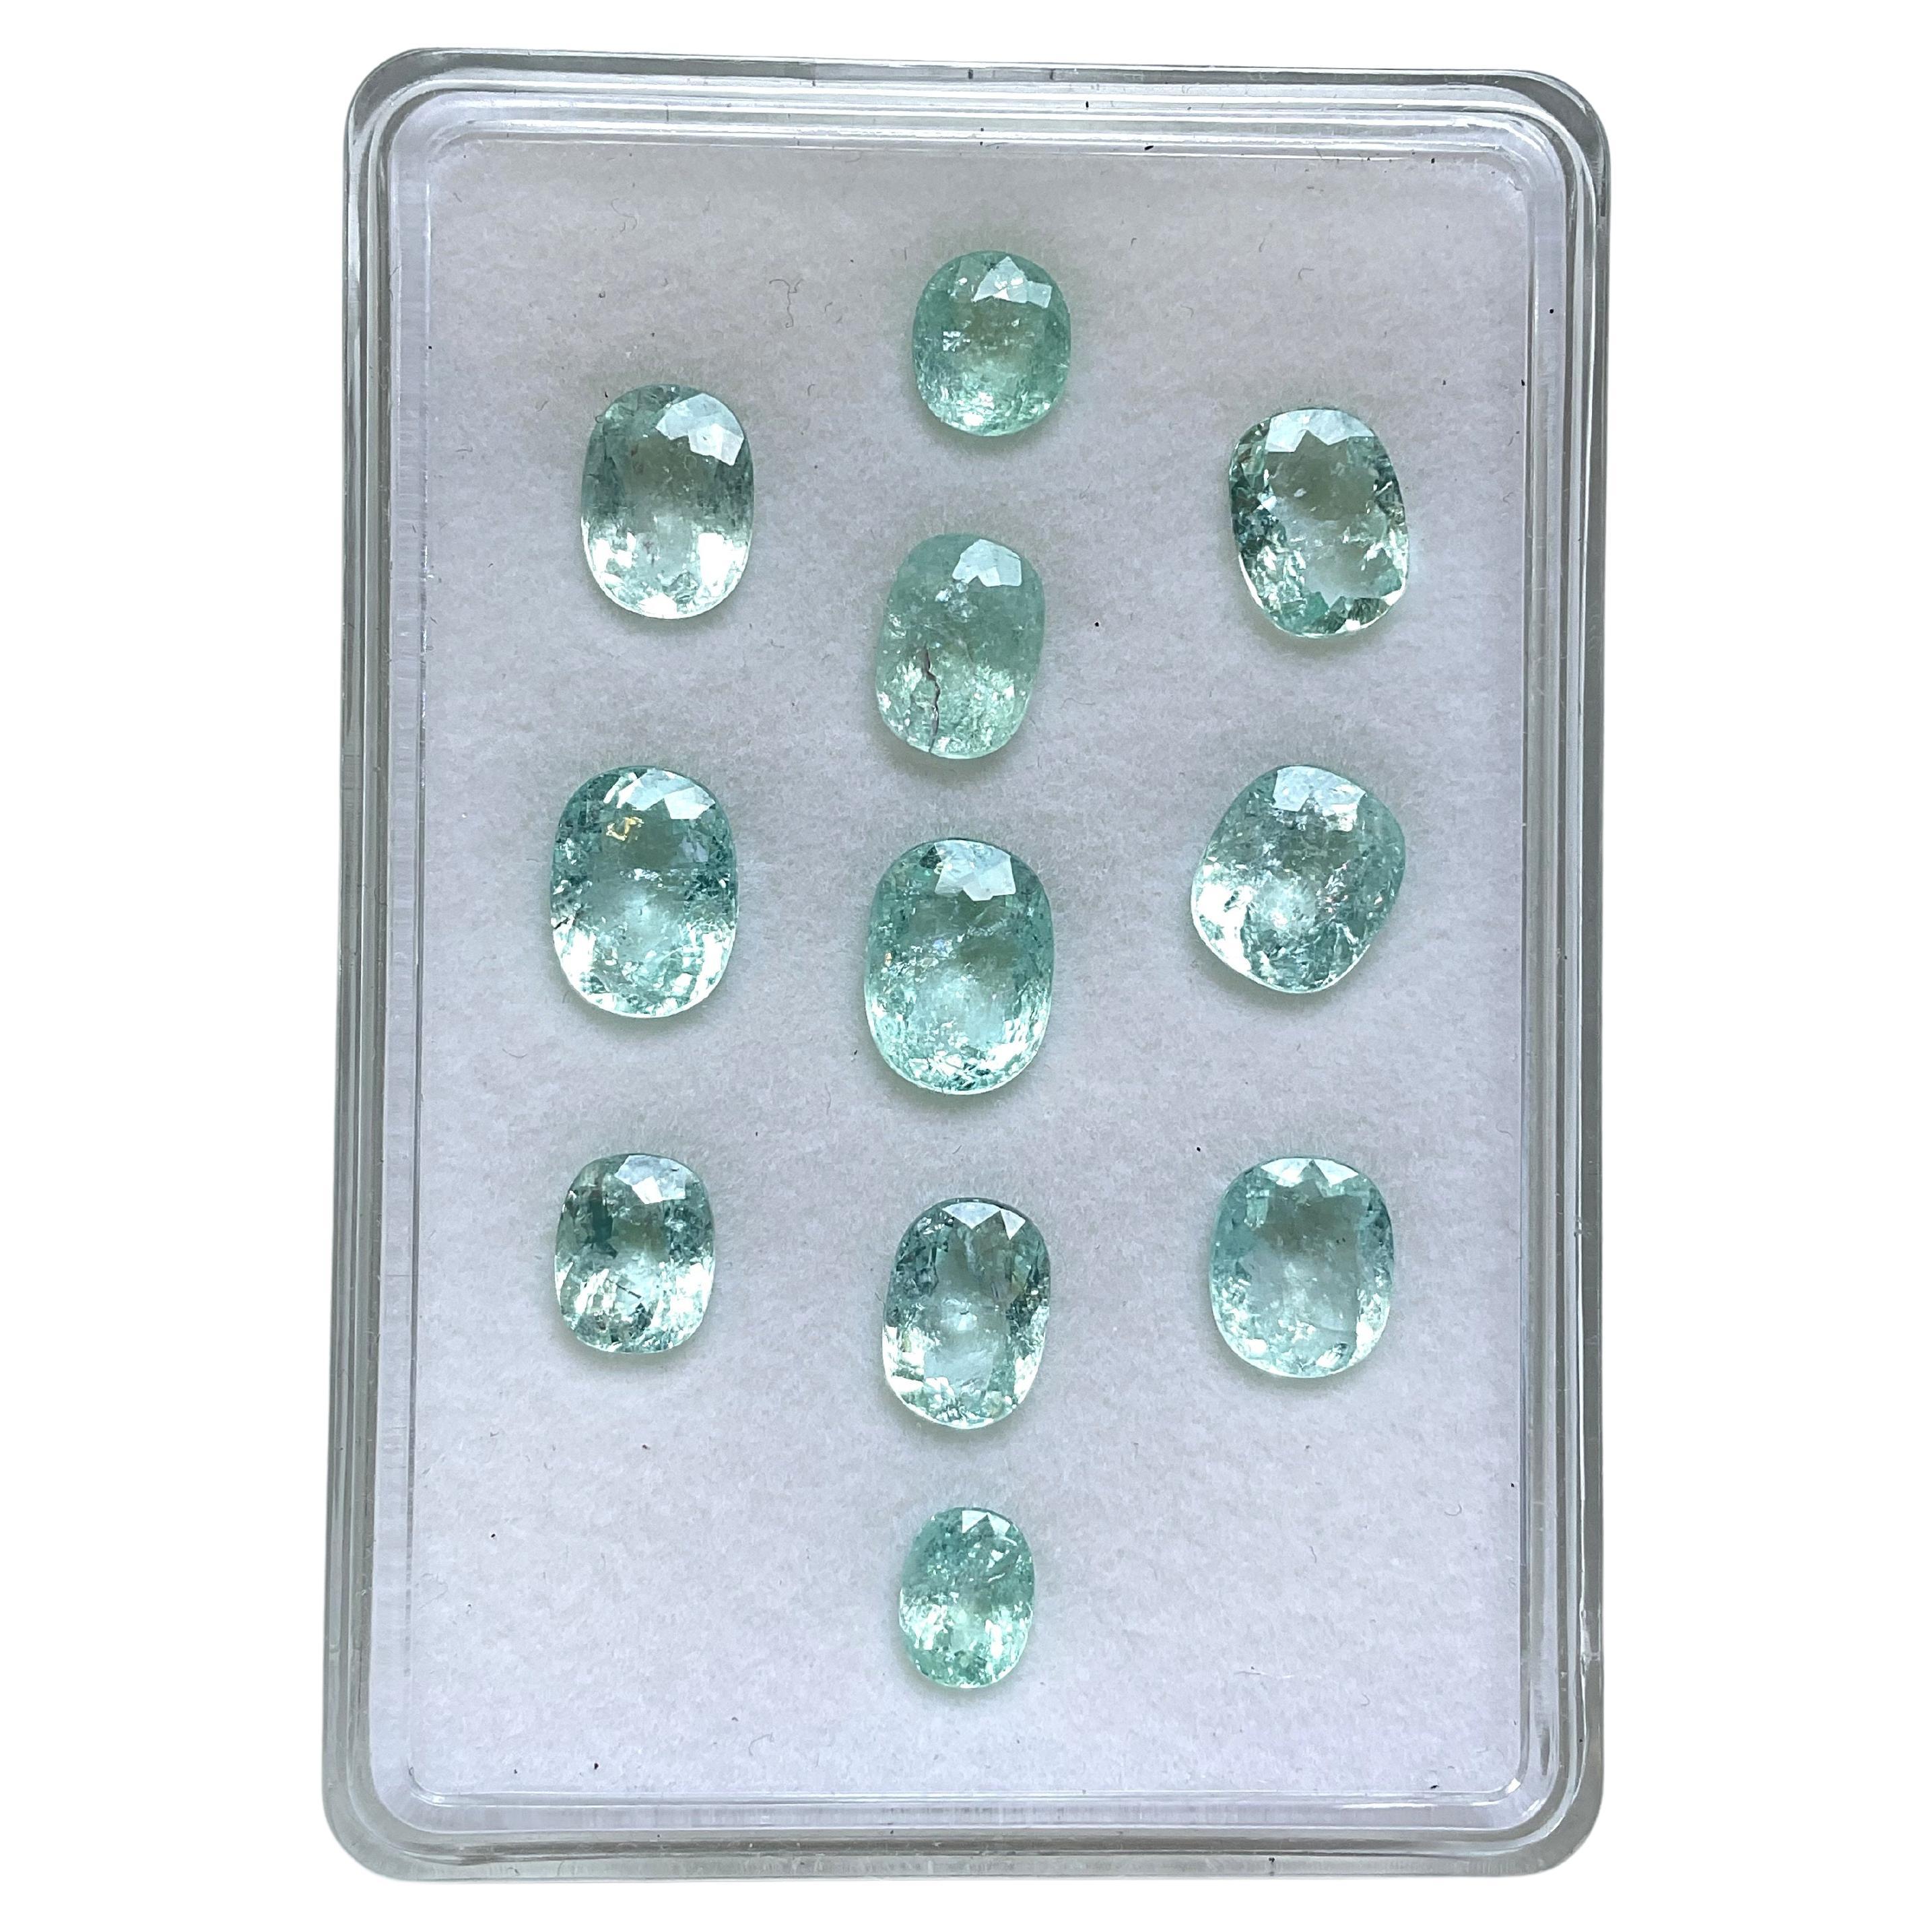 36.04 Carats Paraiba Tourmaline Oval Cut stone Top Quality for Fine Jewelry Gem For Sale